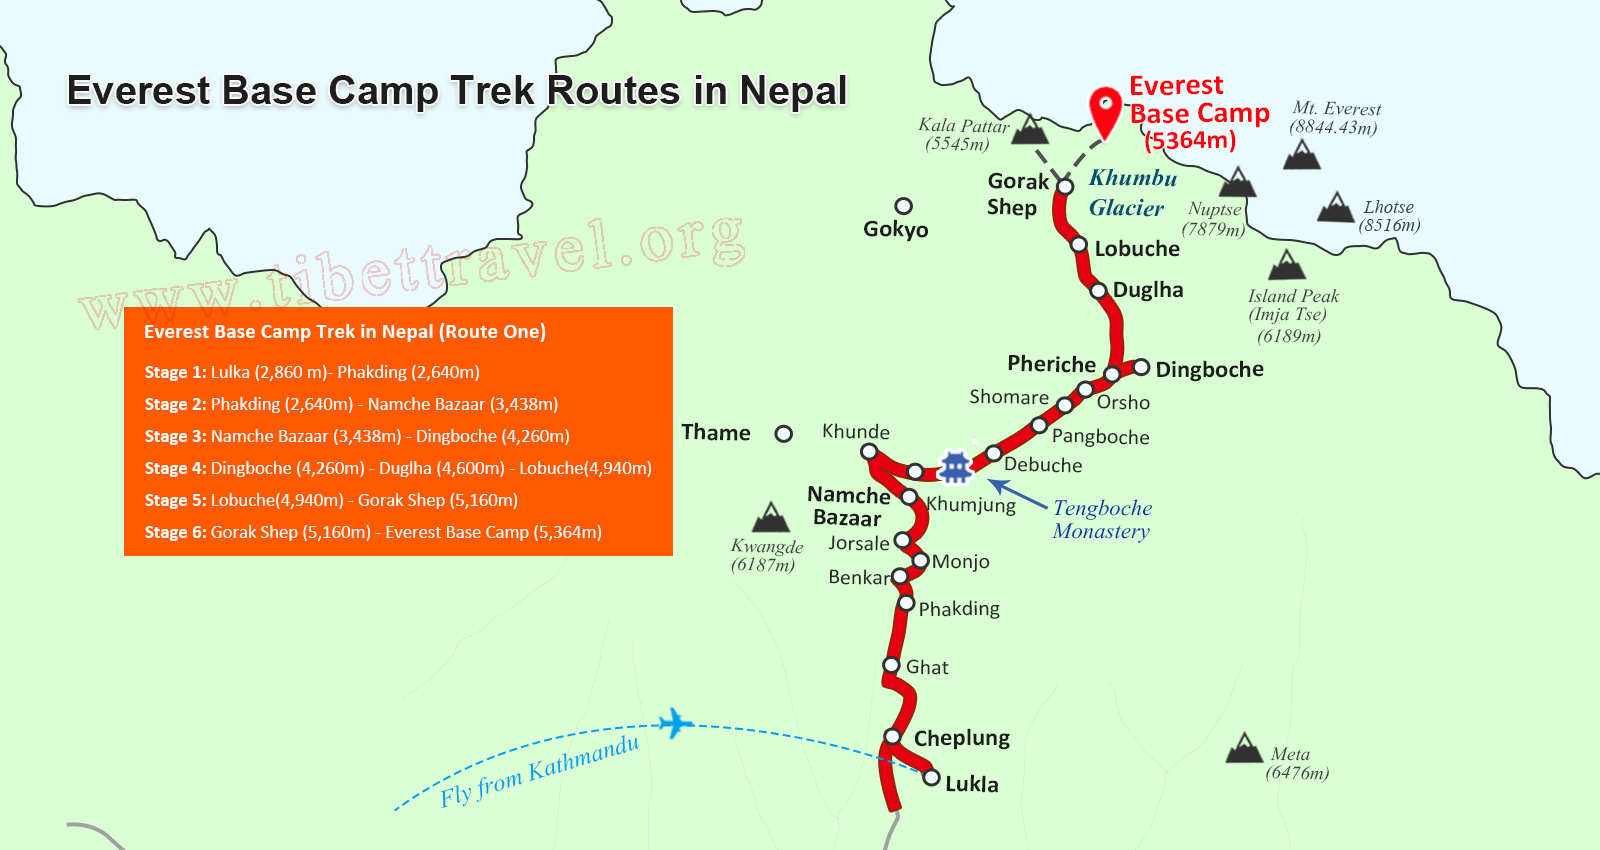 Terry's Trek to Everest Base Camp